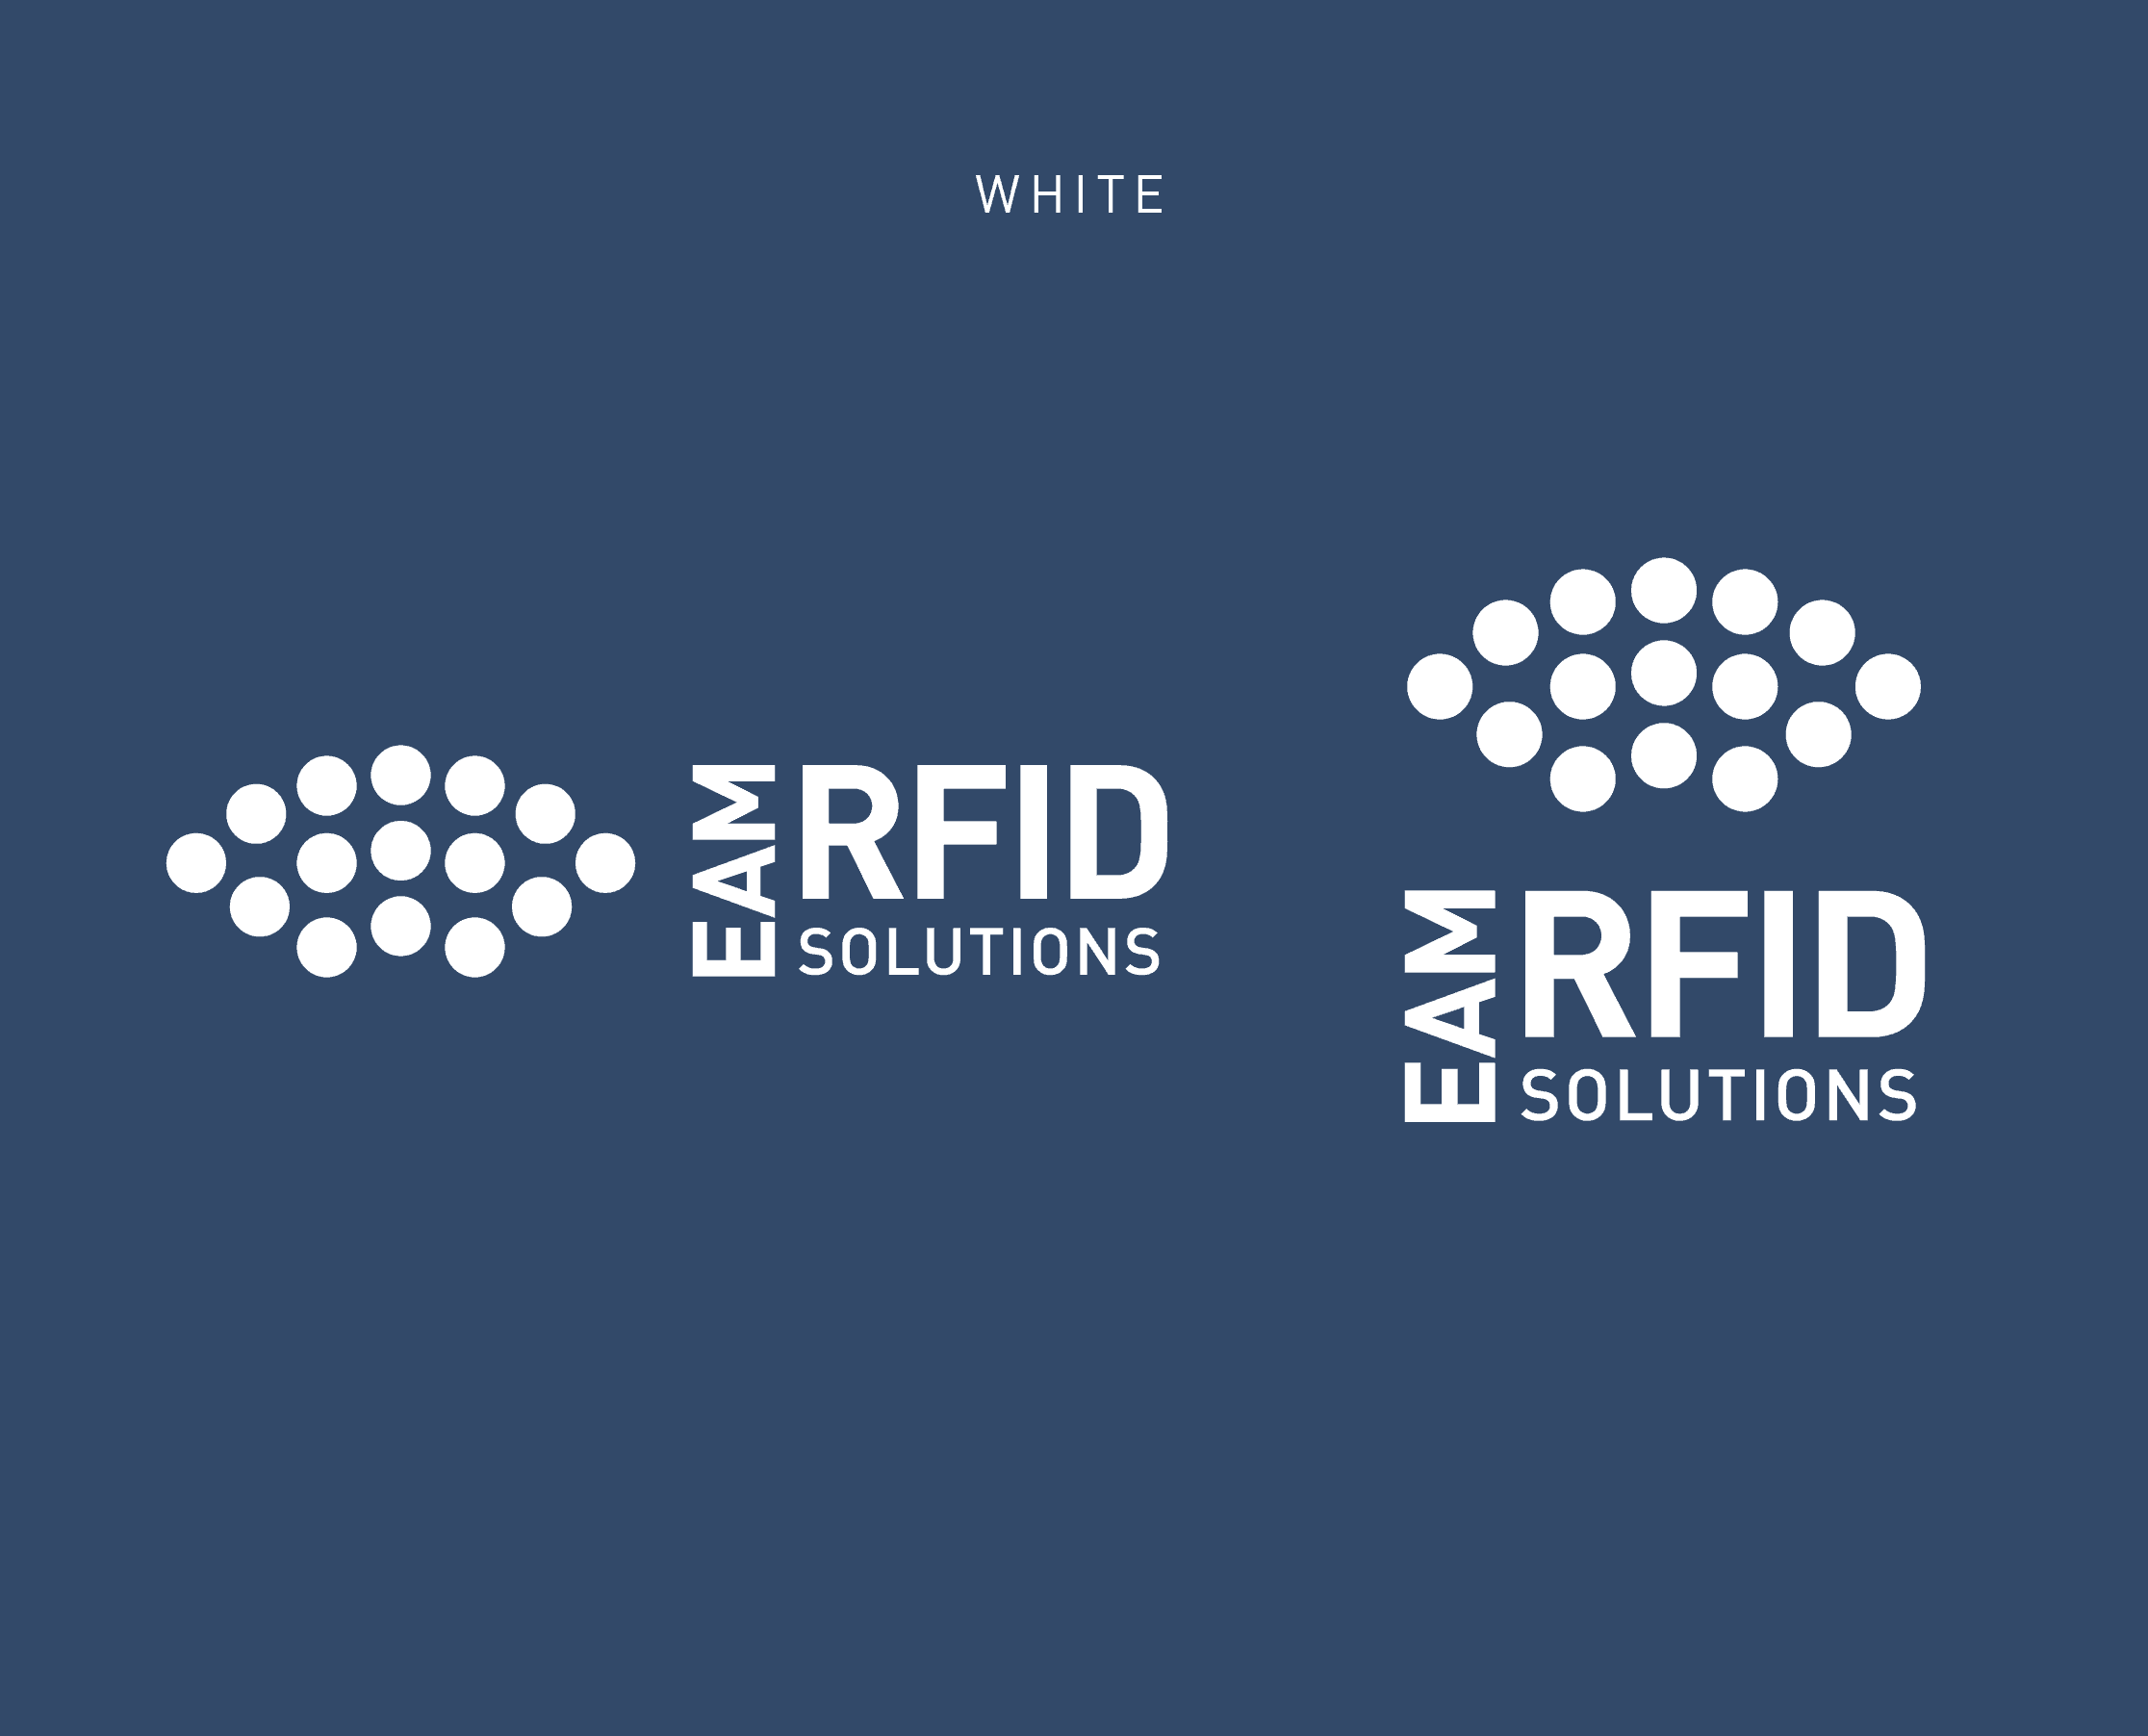 EAM RFID all white logo usage on blue background